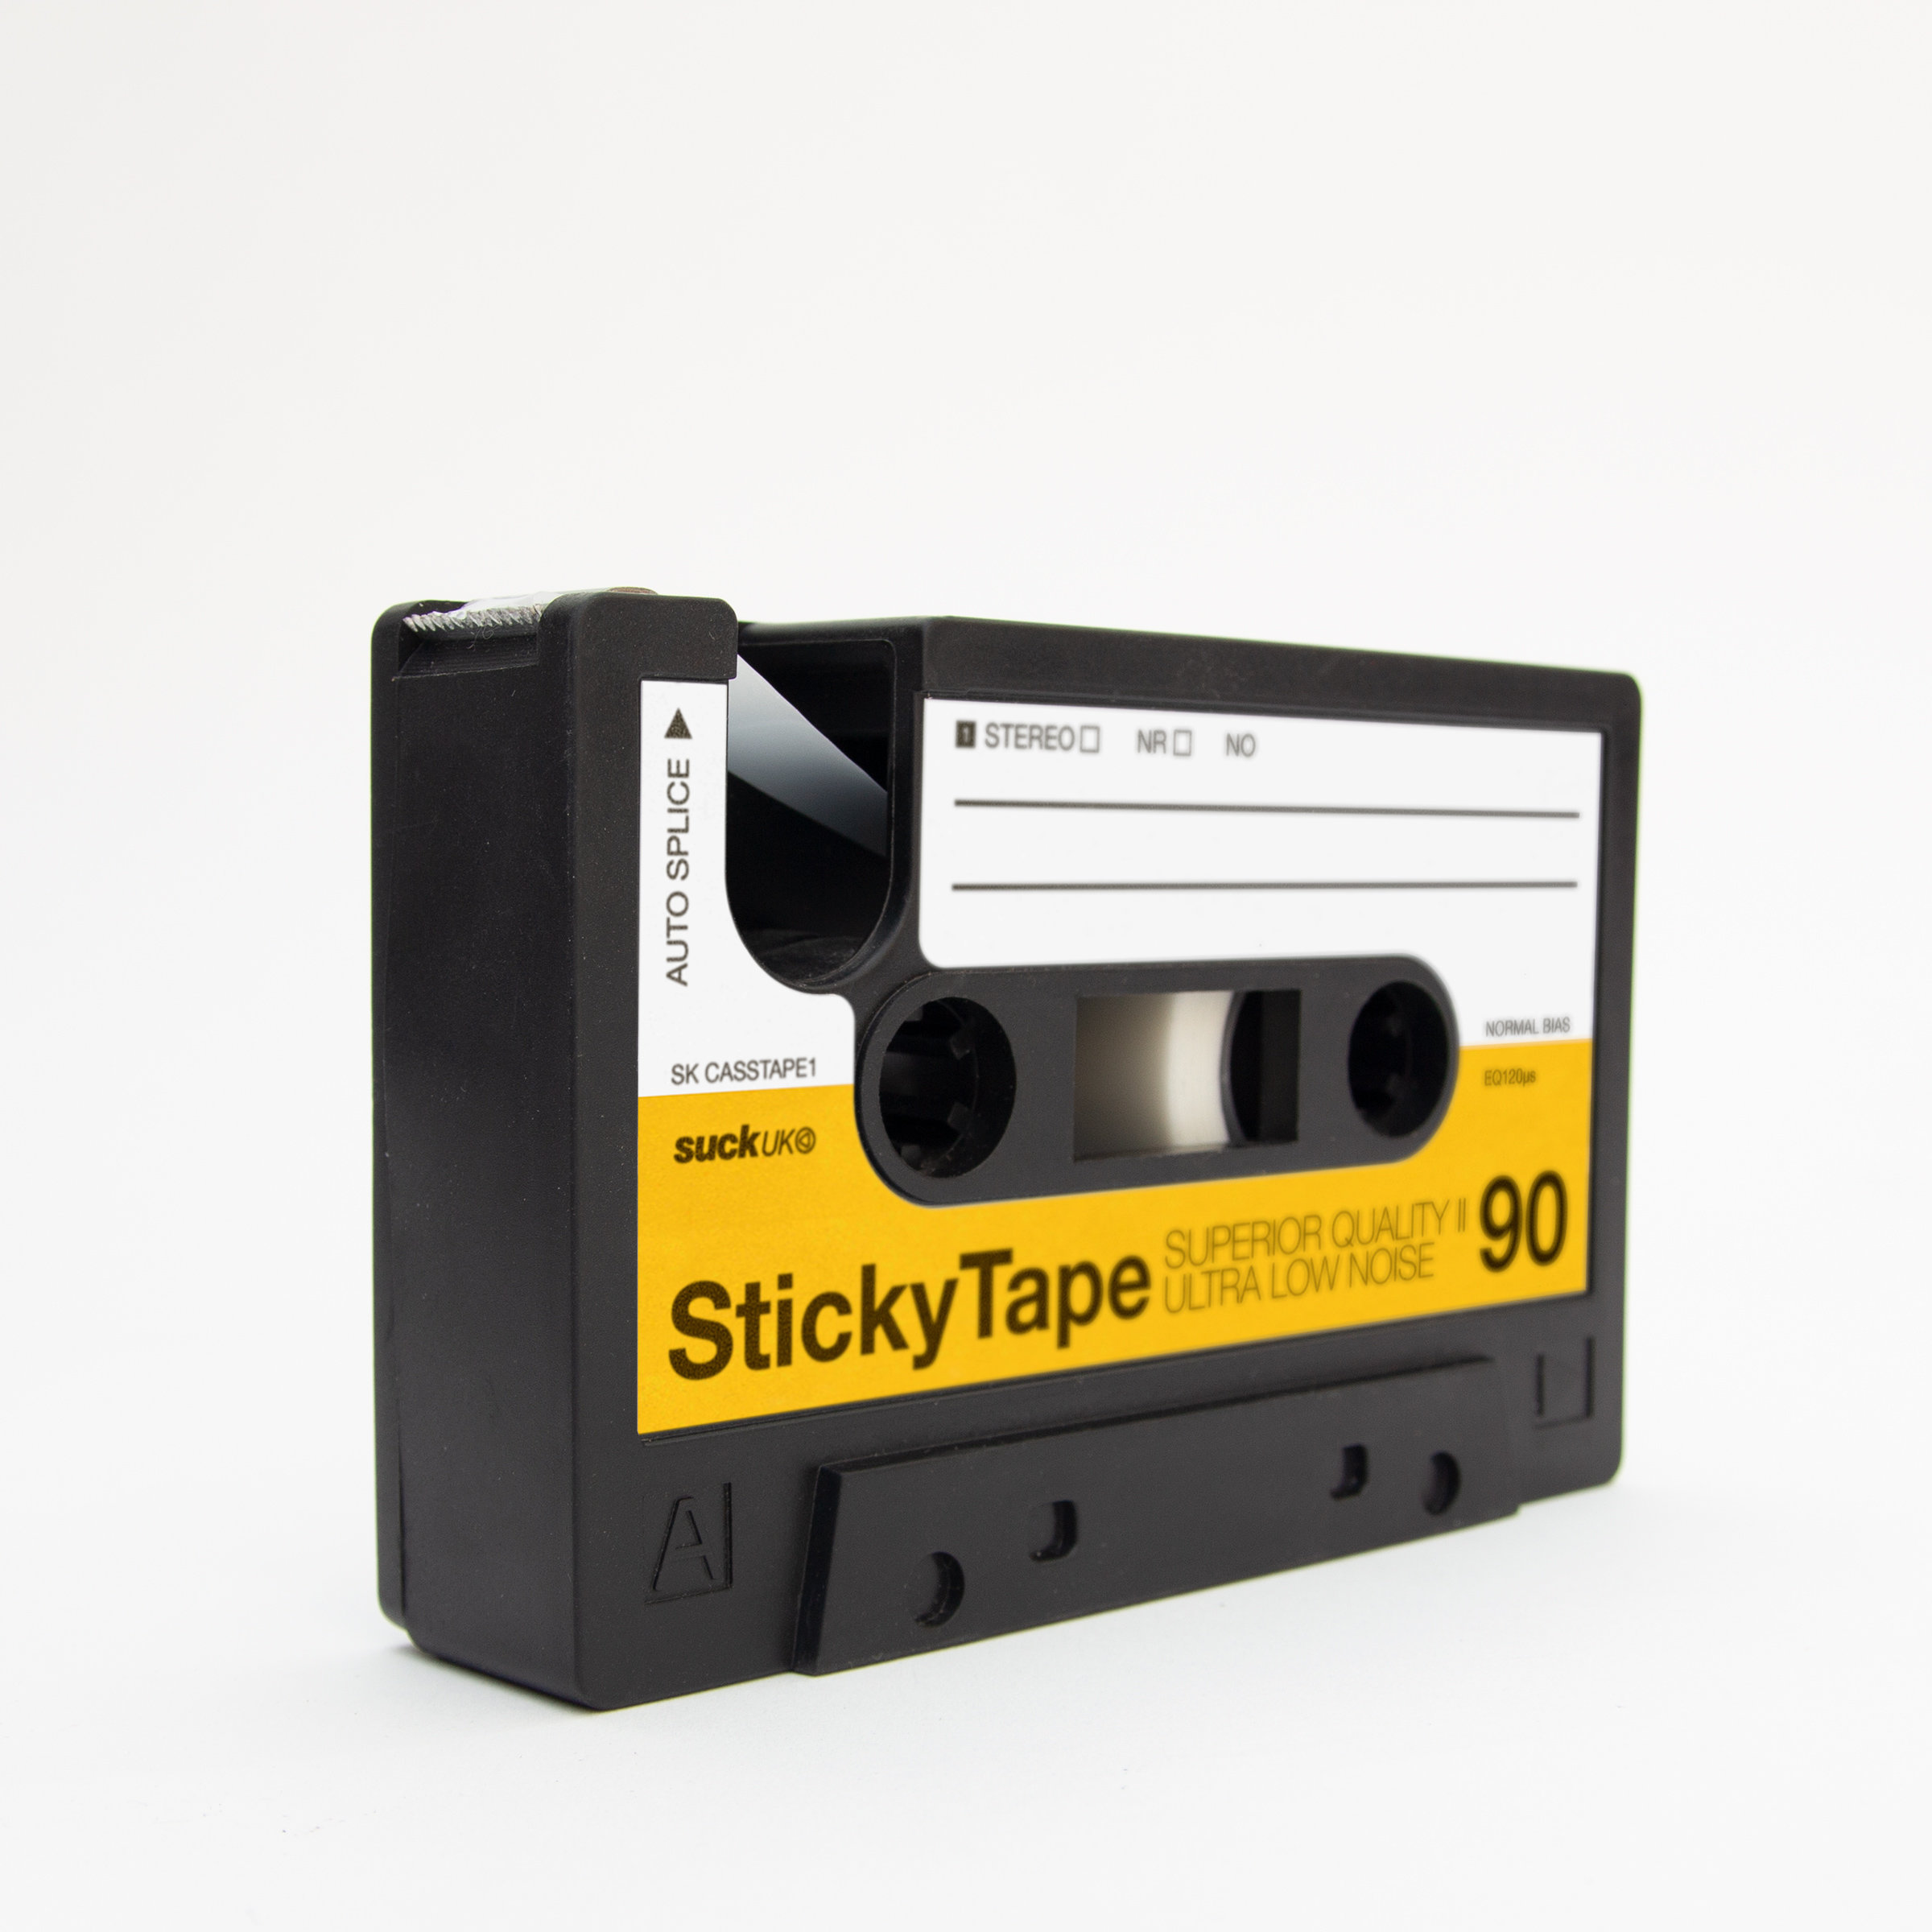 Stick-Tape-Dispenser Cassette. Macro Angle Photo.